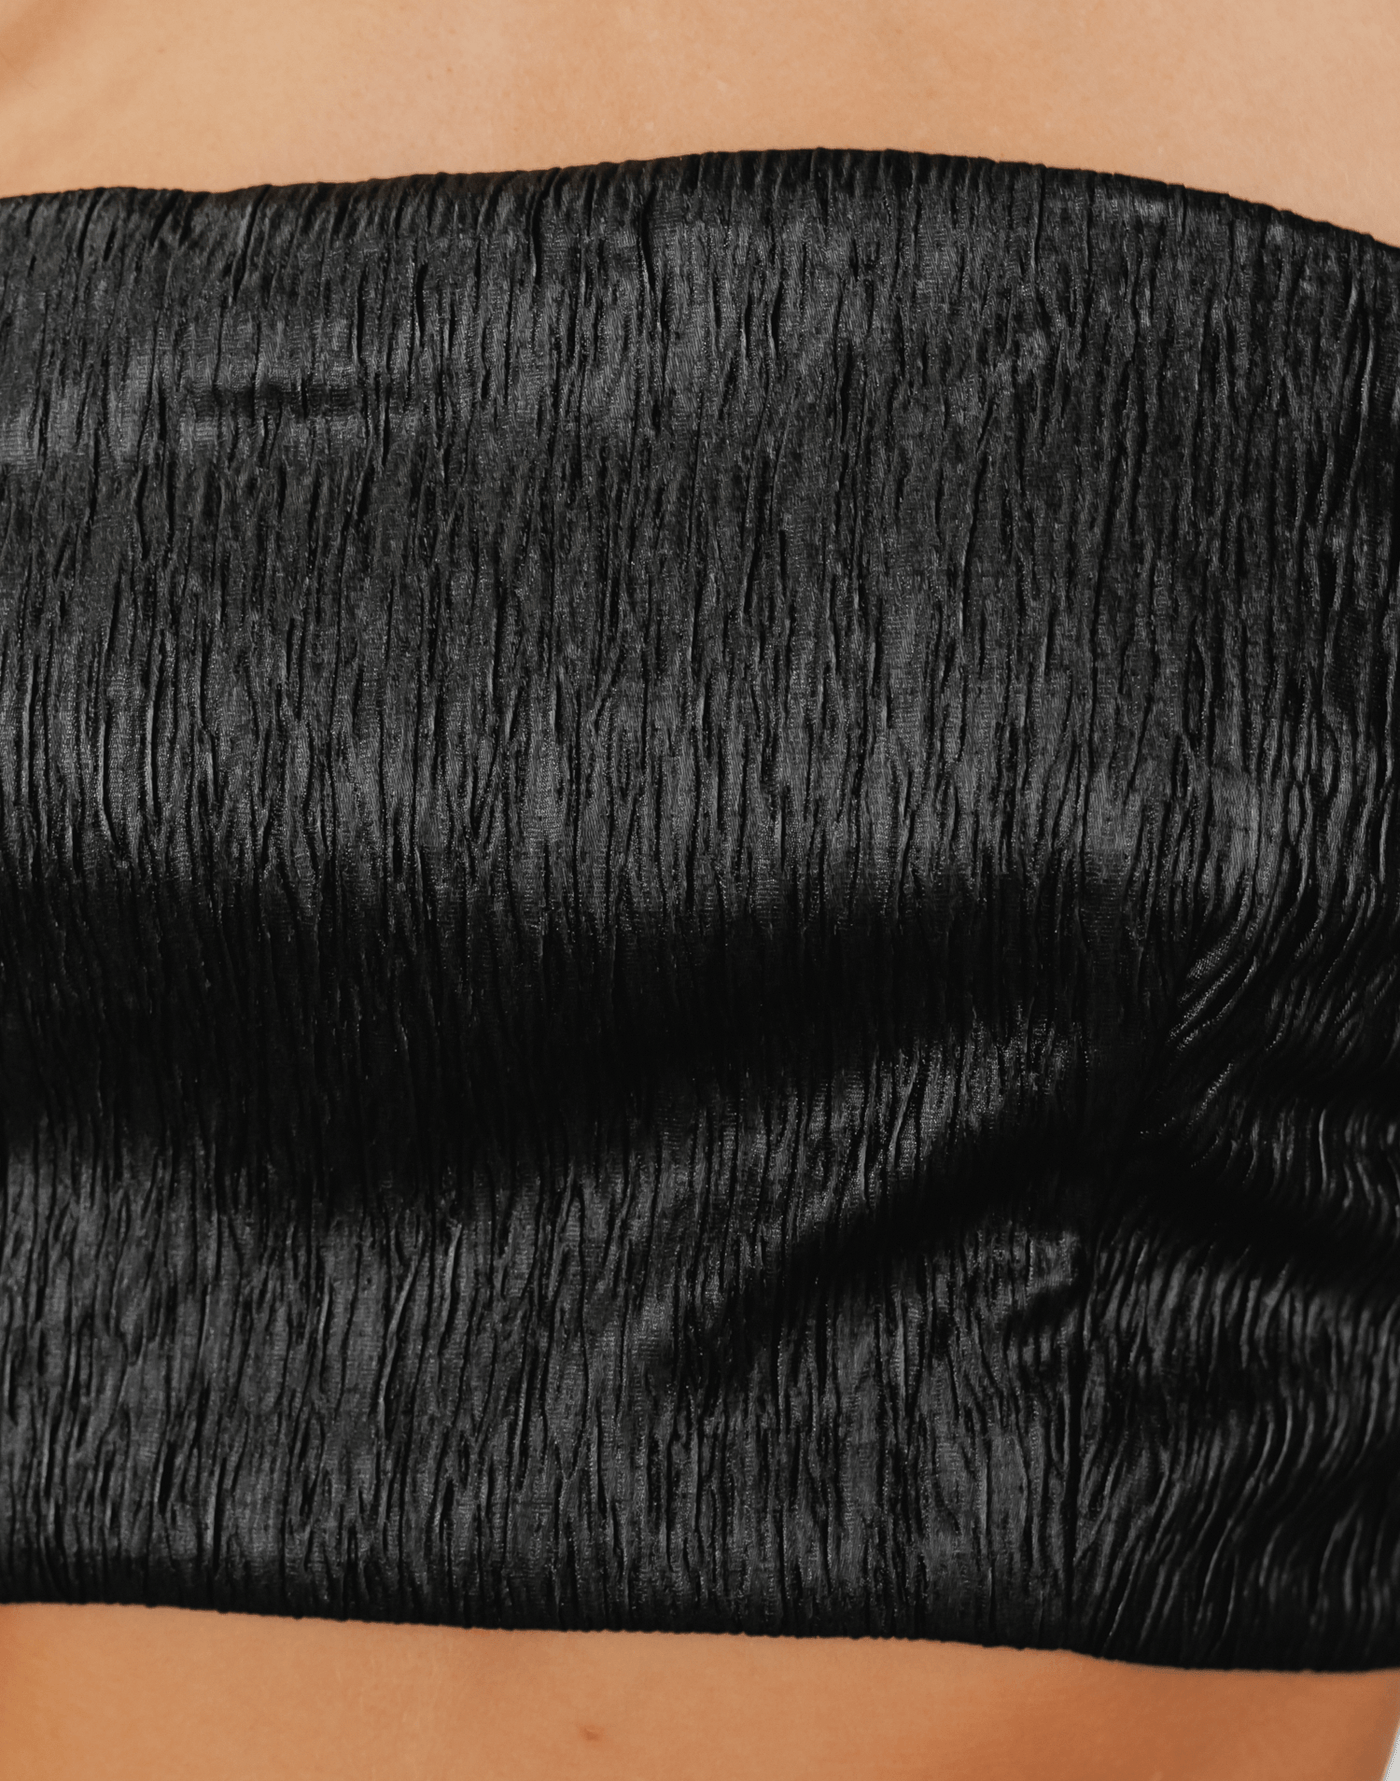 Wild Flower Crop Top - Black Textured Strapless Top - Women's Top - Charcoal Clothing